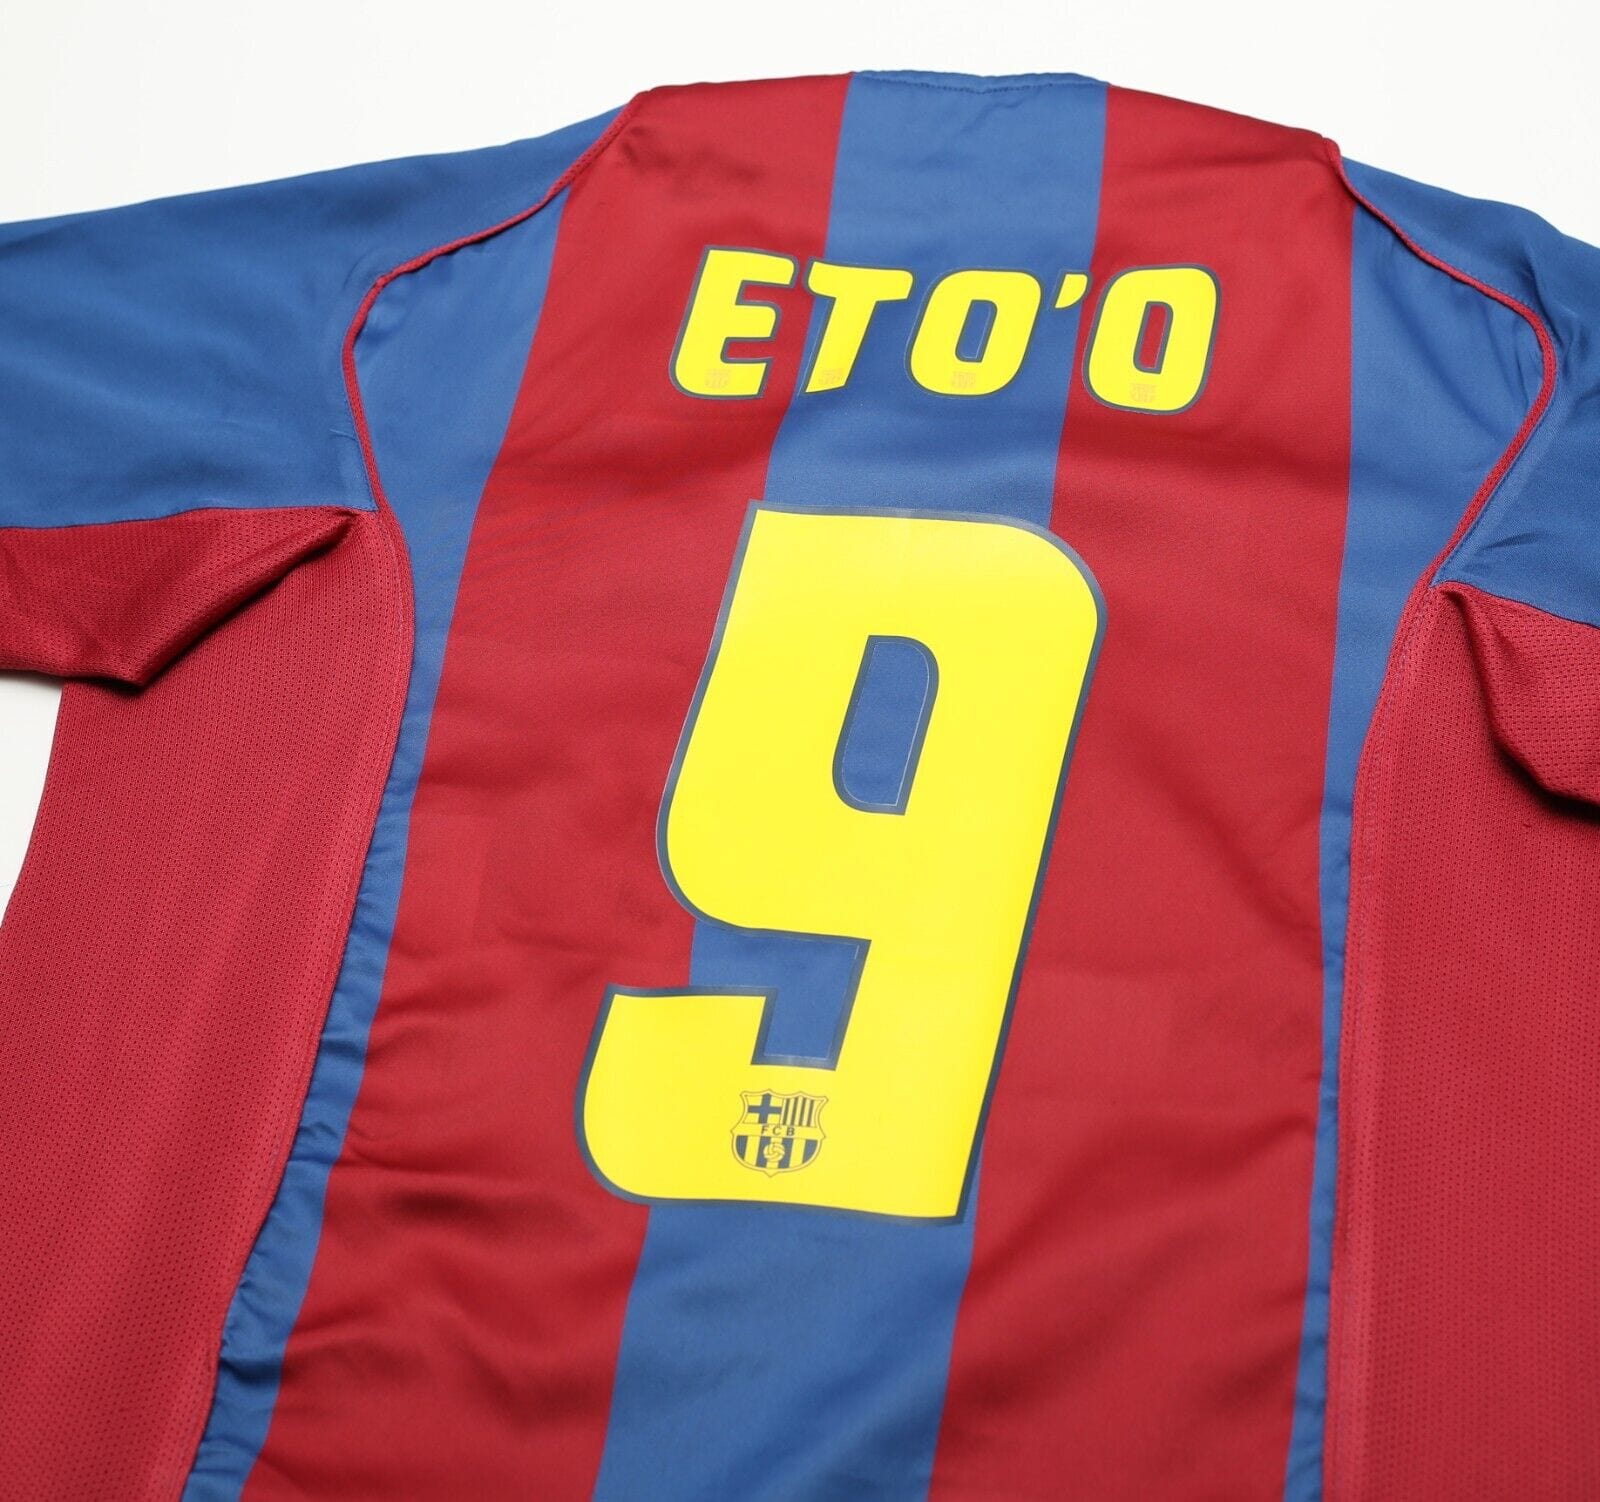 2004/05 ETO'O #9 Barcelona Vintage Nike Home Football Shirt Jersey (S)